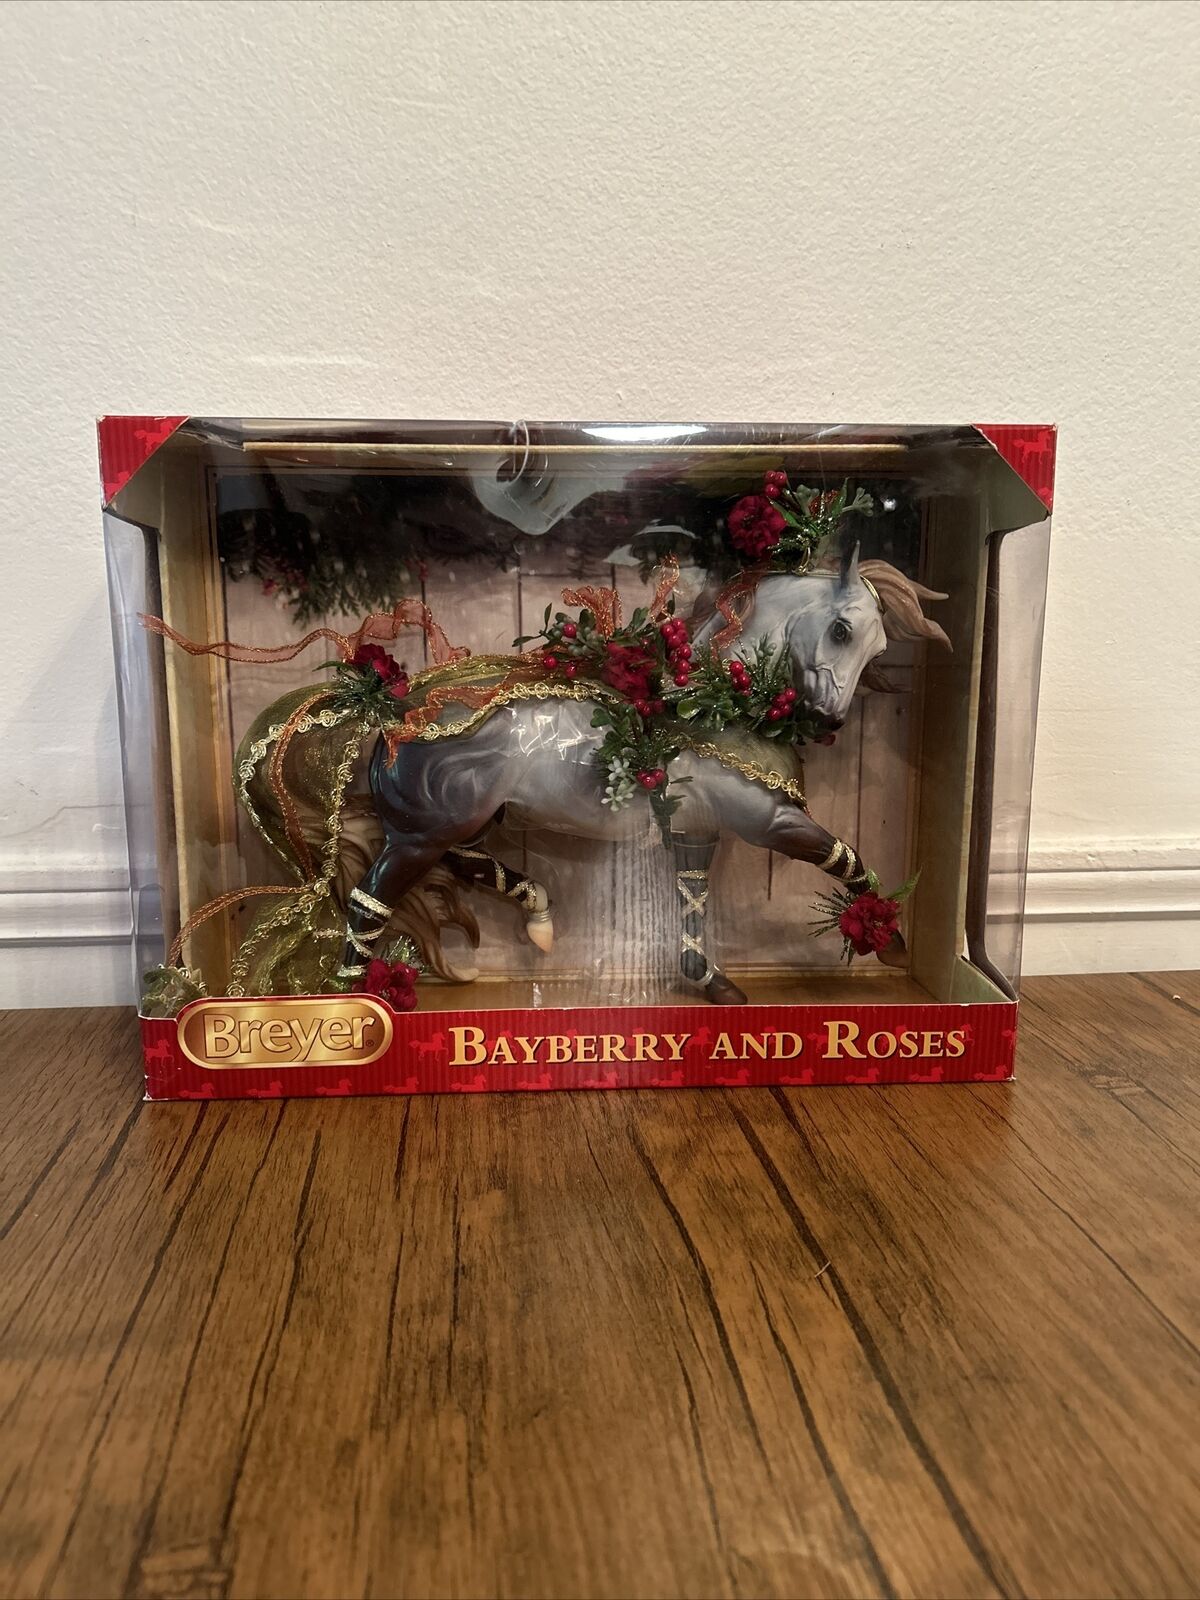 NIB 2014 Breyer Bayberry and Roses #700117 Christmas Horse